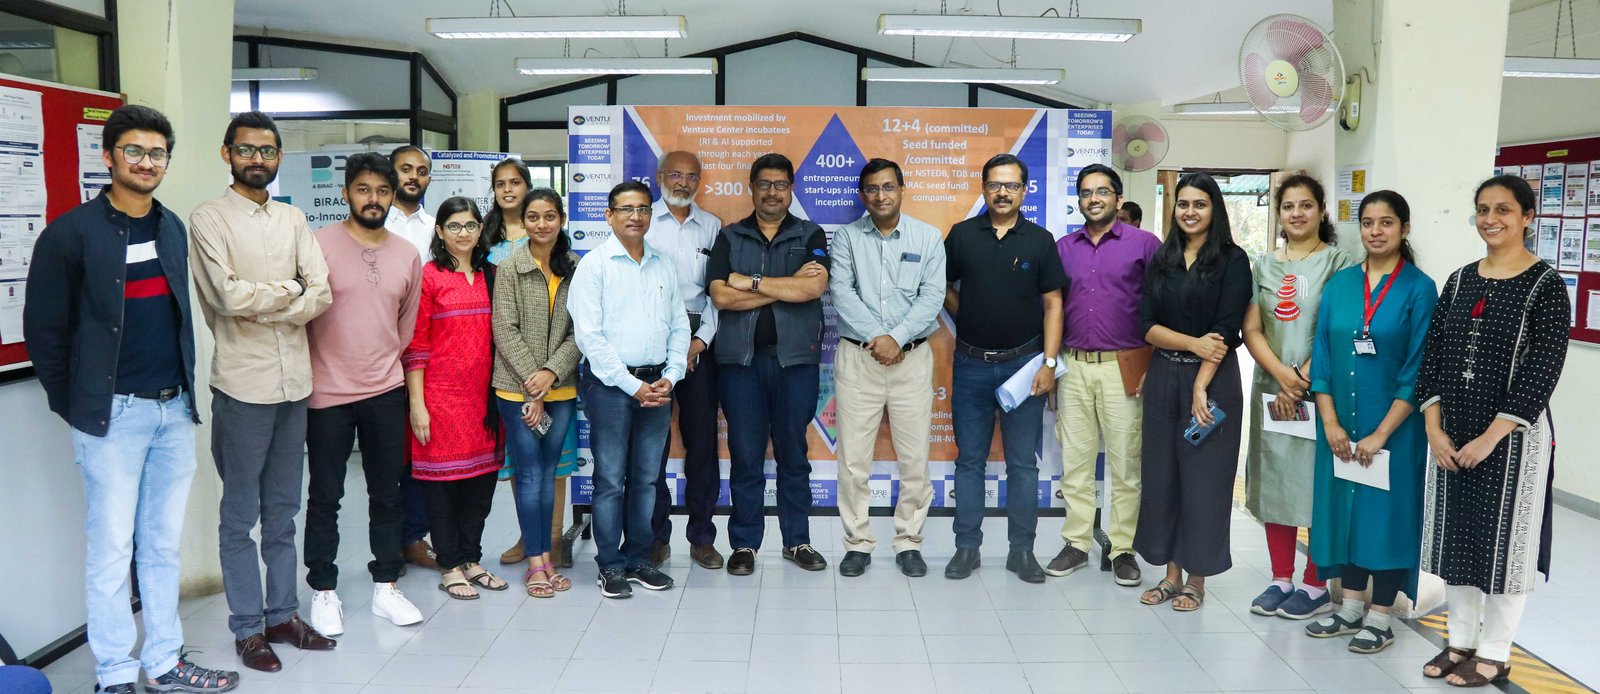 The Bajaj CSR Grantees along with the Bajaj Auto CSR Team and Venture Center Team